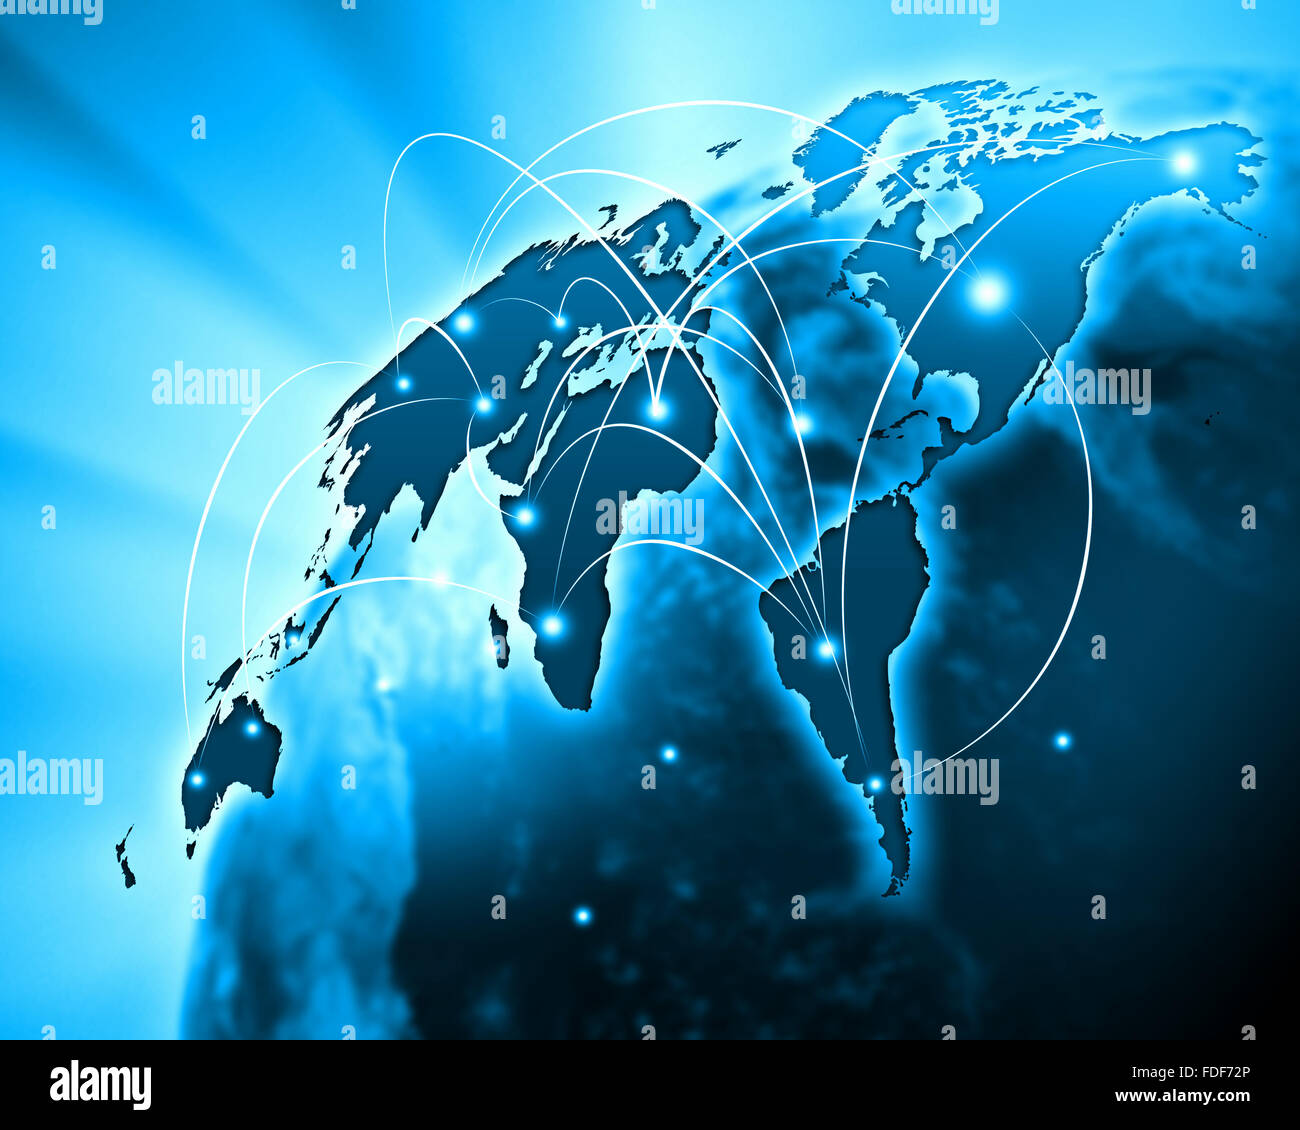 Blue vivid image of globe. Globalization concept Stock Photo